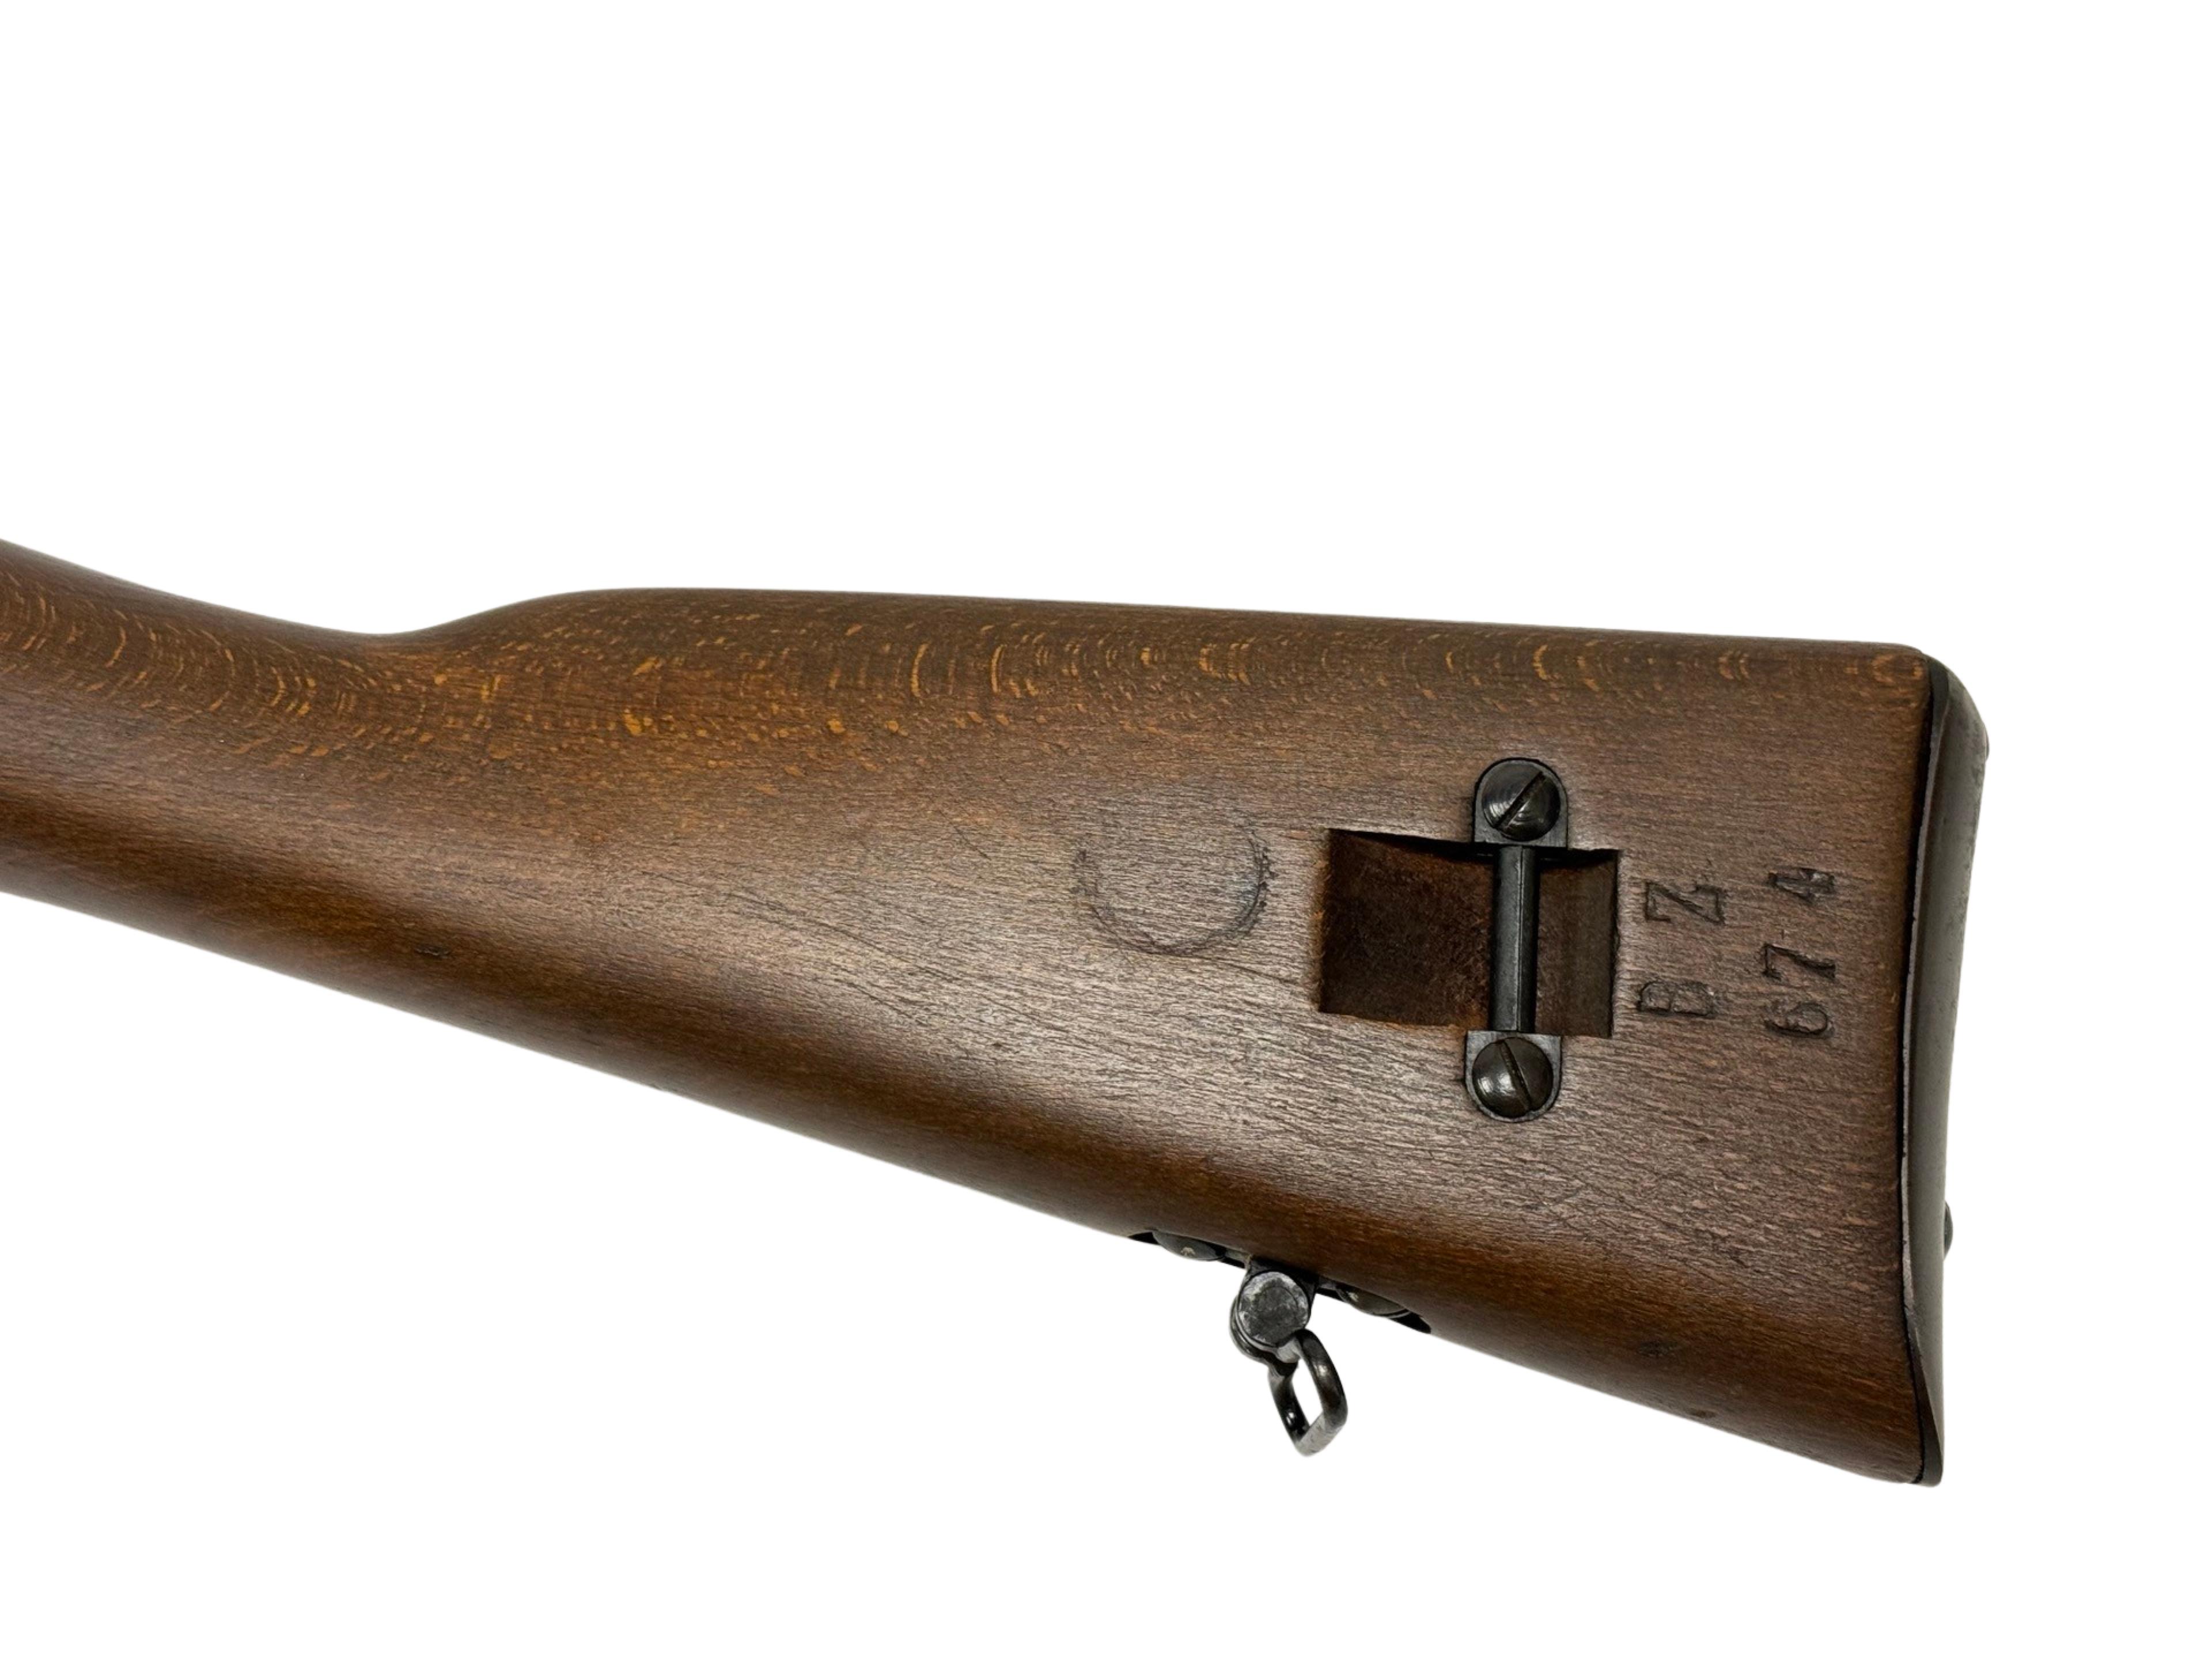 Excellent WWII Italian 1944 R.E. Terni M38 6.5x52mm CARCANO Bolt Action Short Rifle